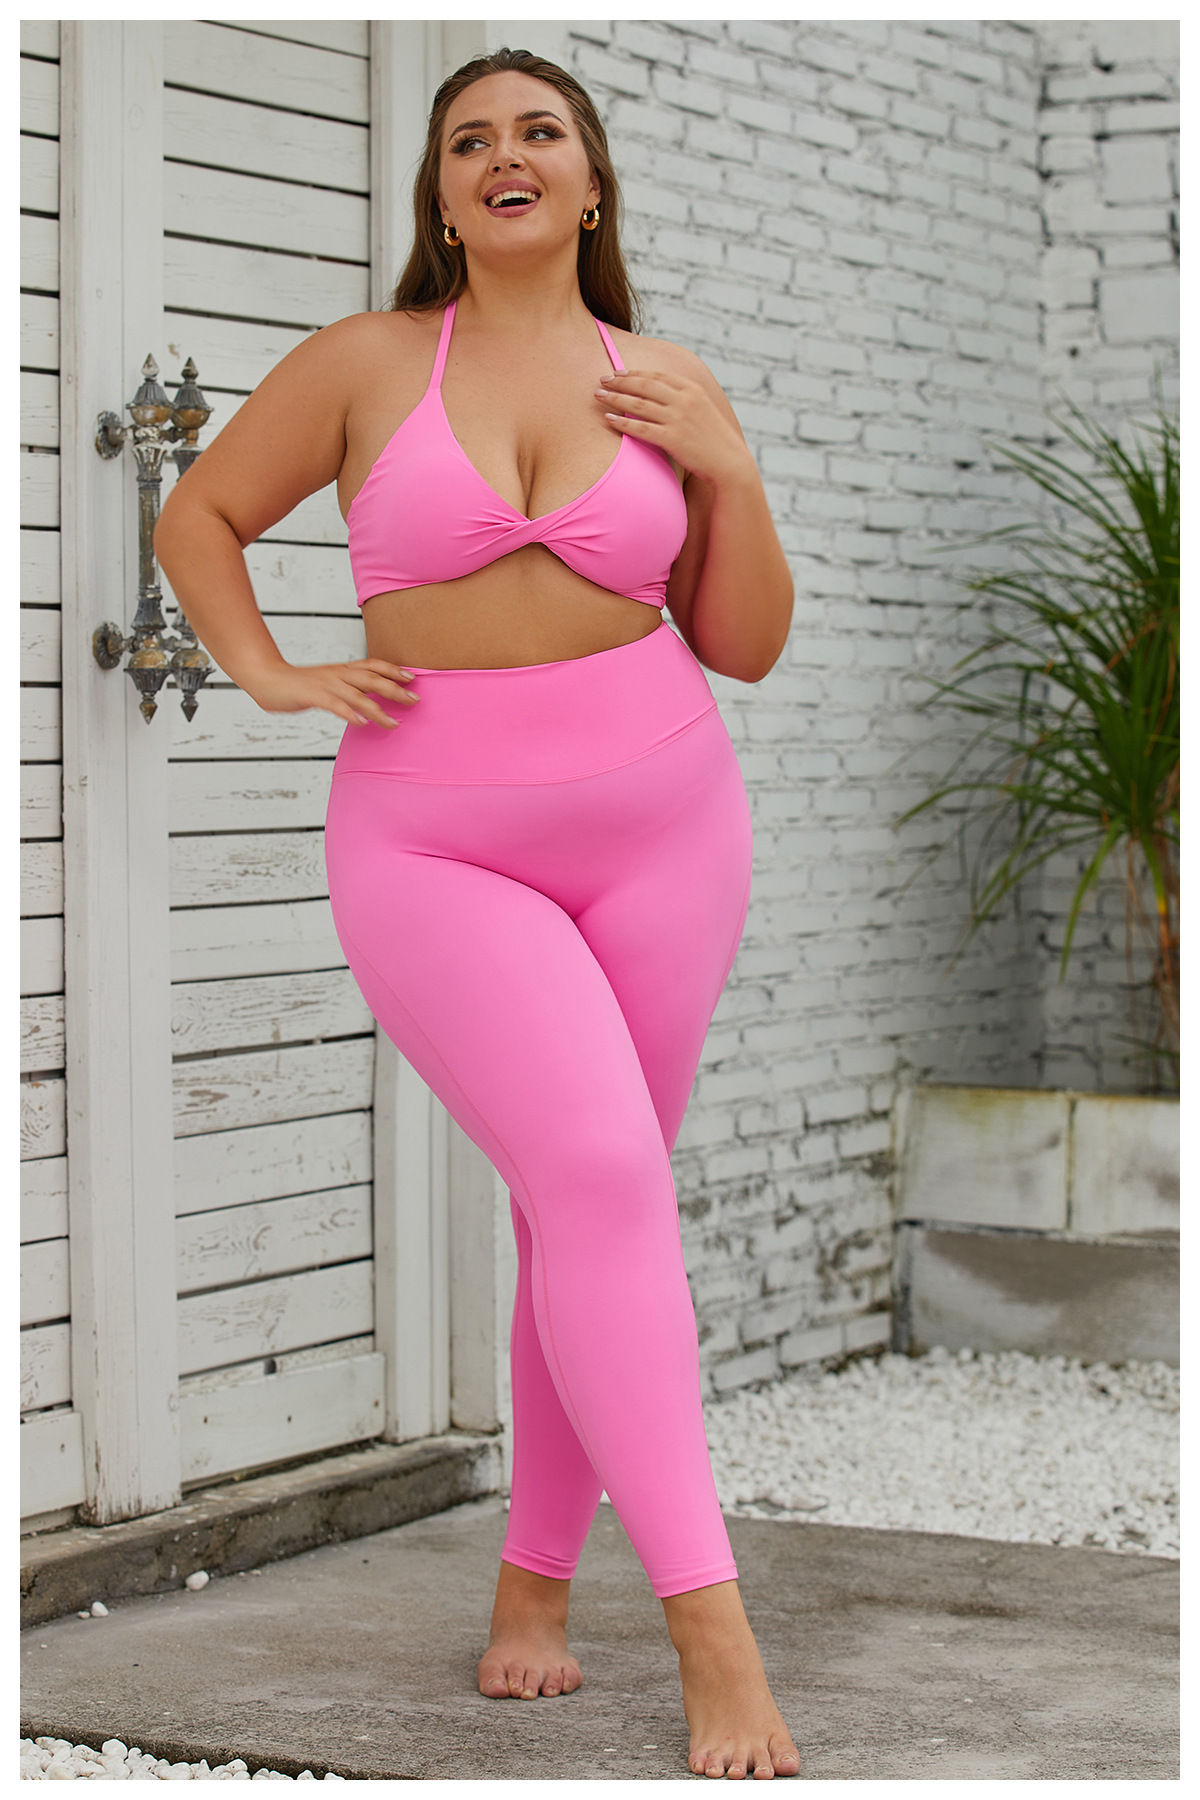 Barbie Pink bra and pants